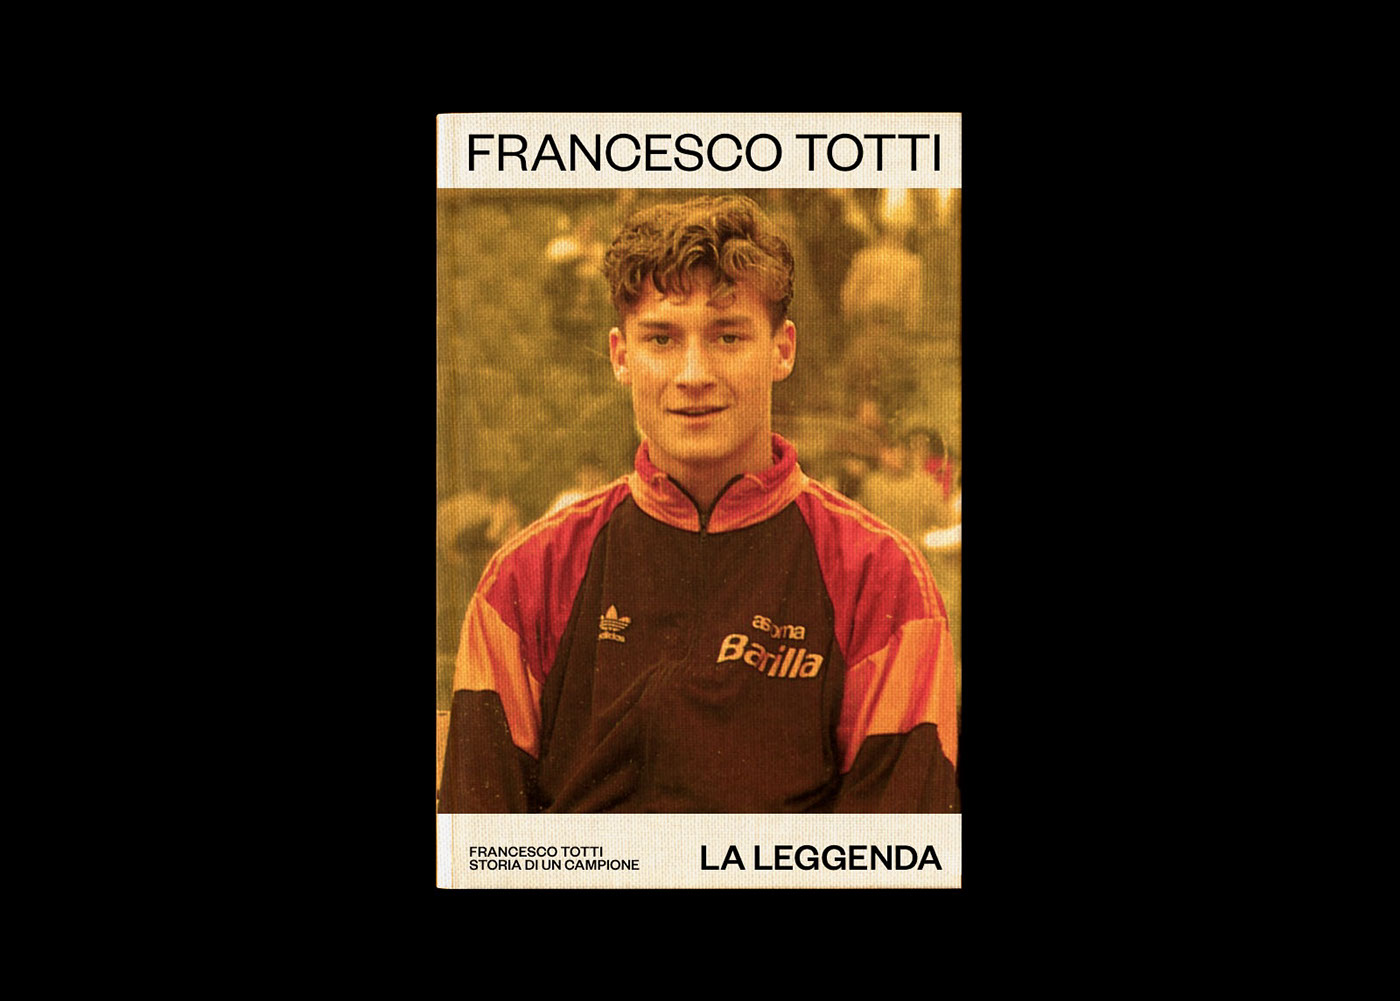 francescototti francesco totti asroma as roma AS Roma 1927 grafik design publication soccer football